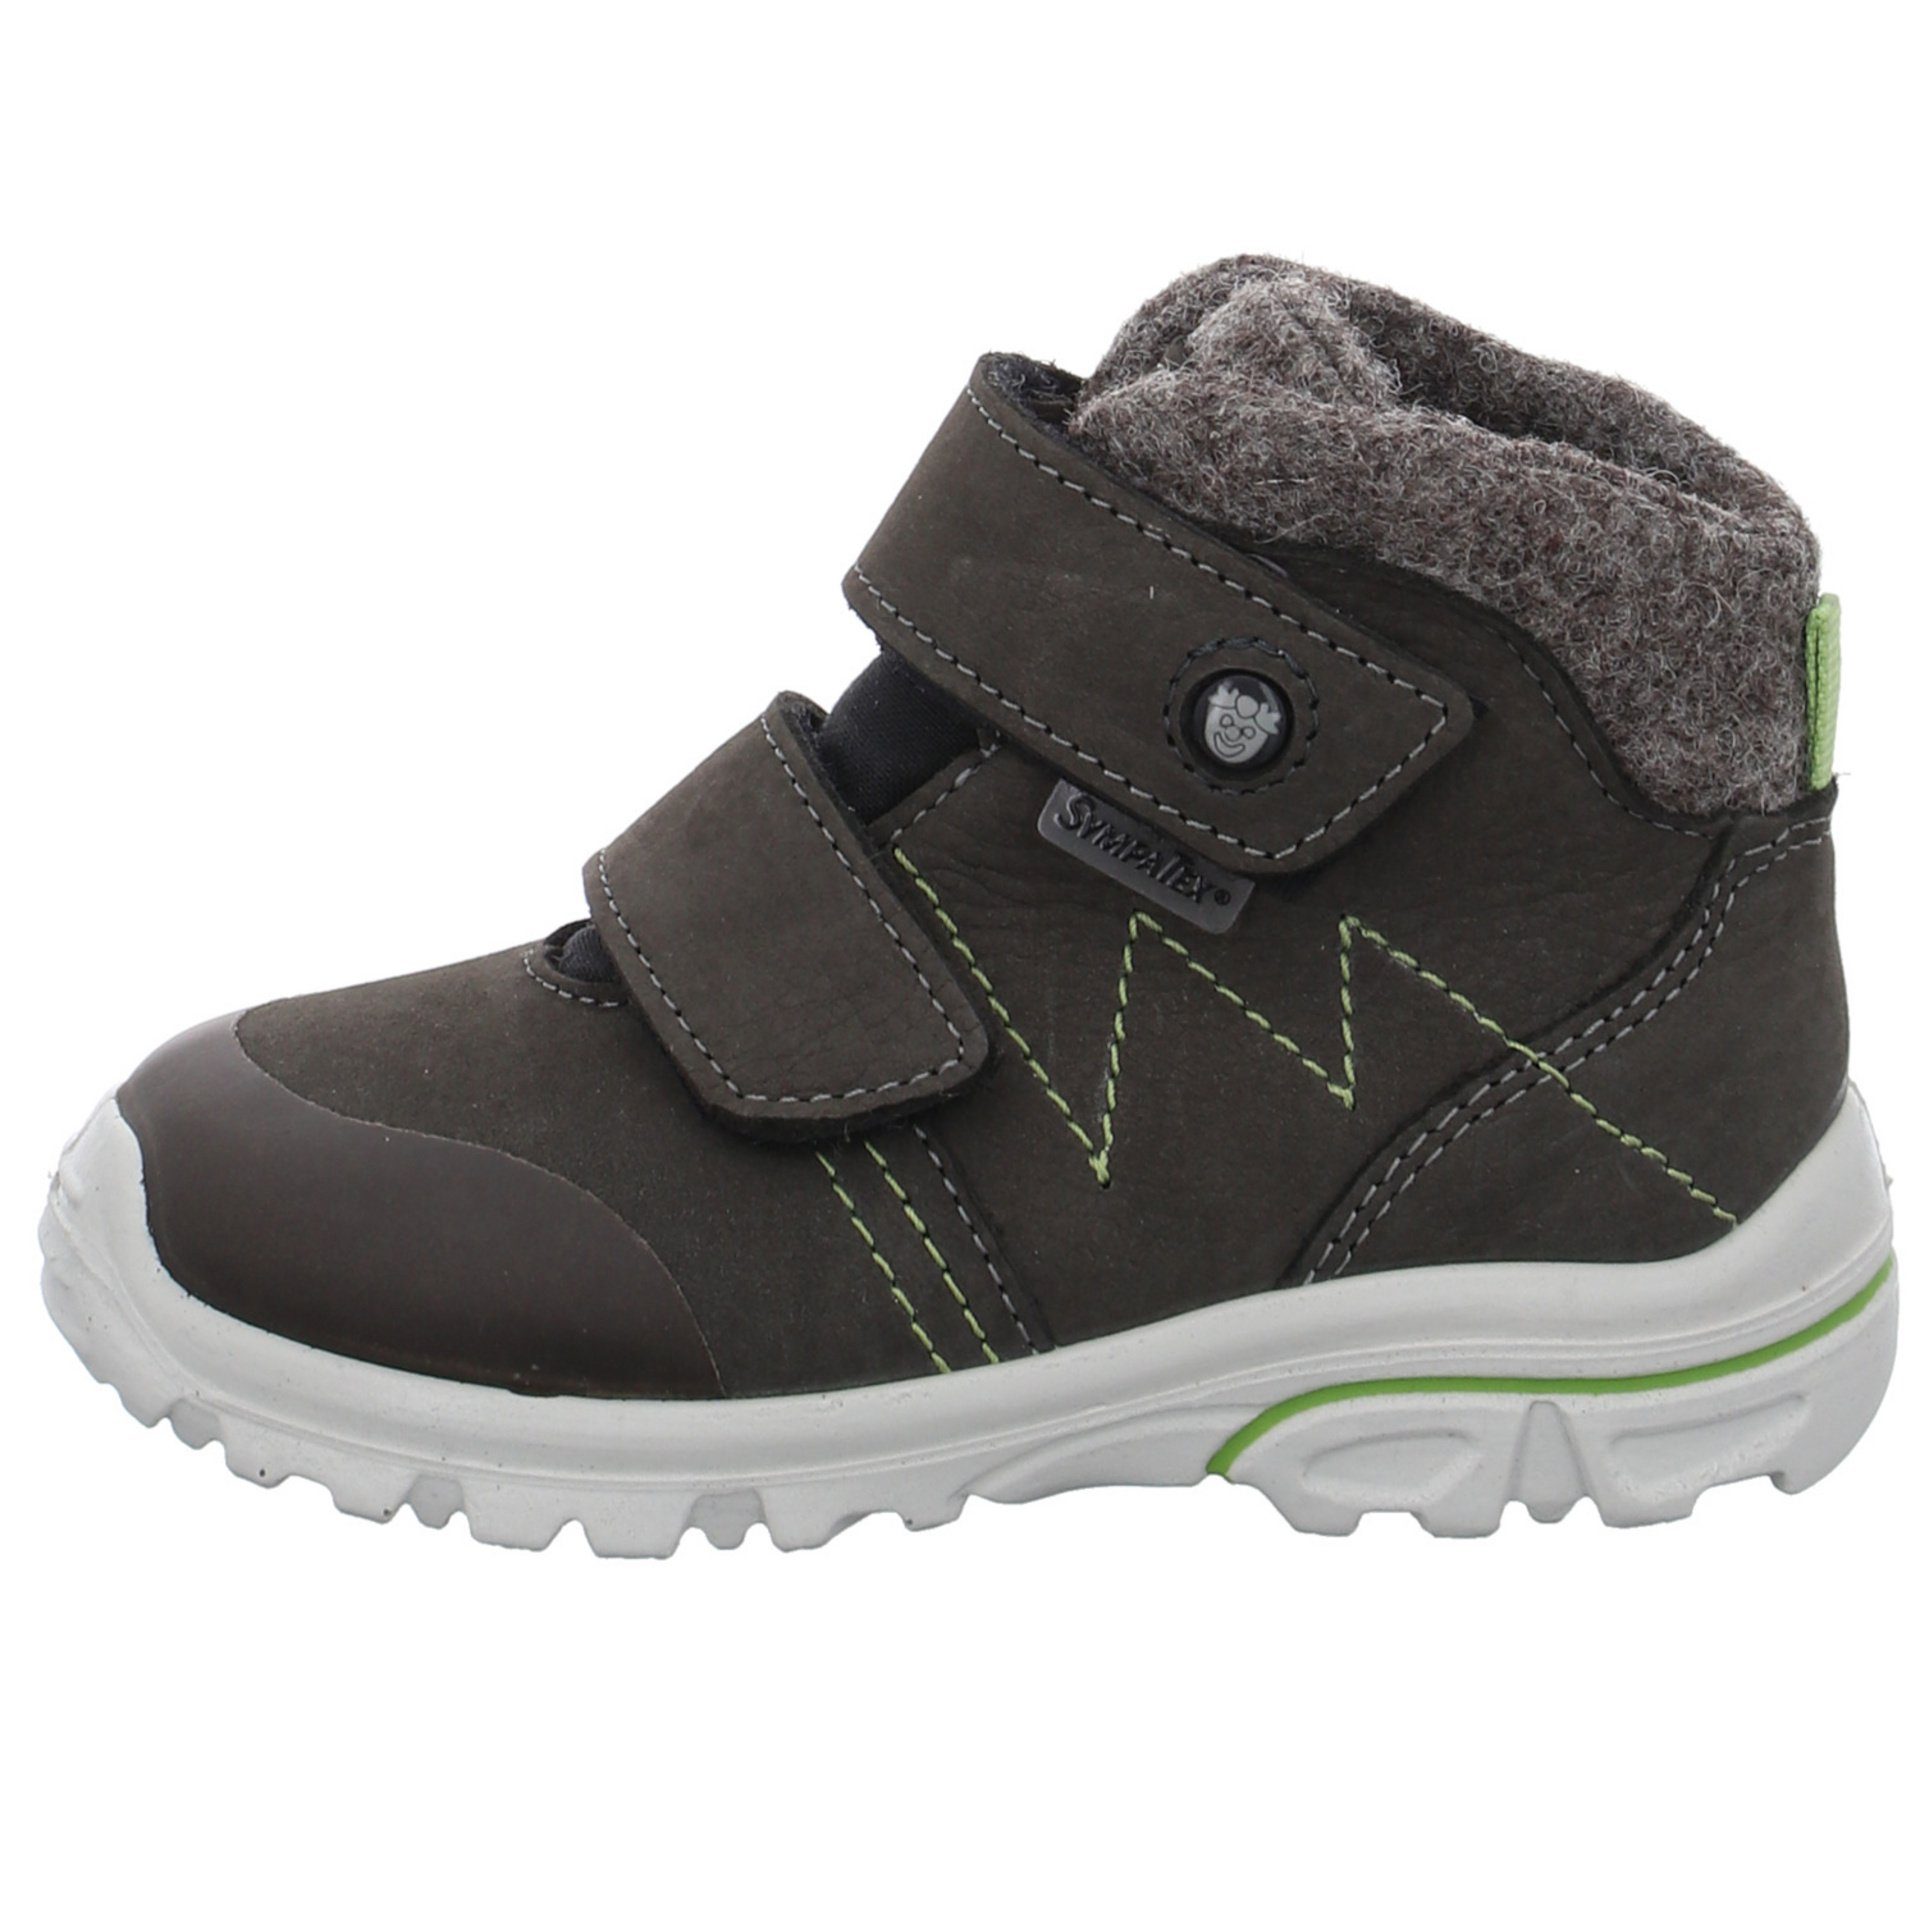 Baby Lauflernschuhe Leder-/Textilkombination Ricosta Boots Krabbelschuhe Dario Pepino Lauflernschuh timo